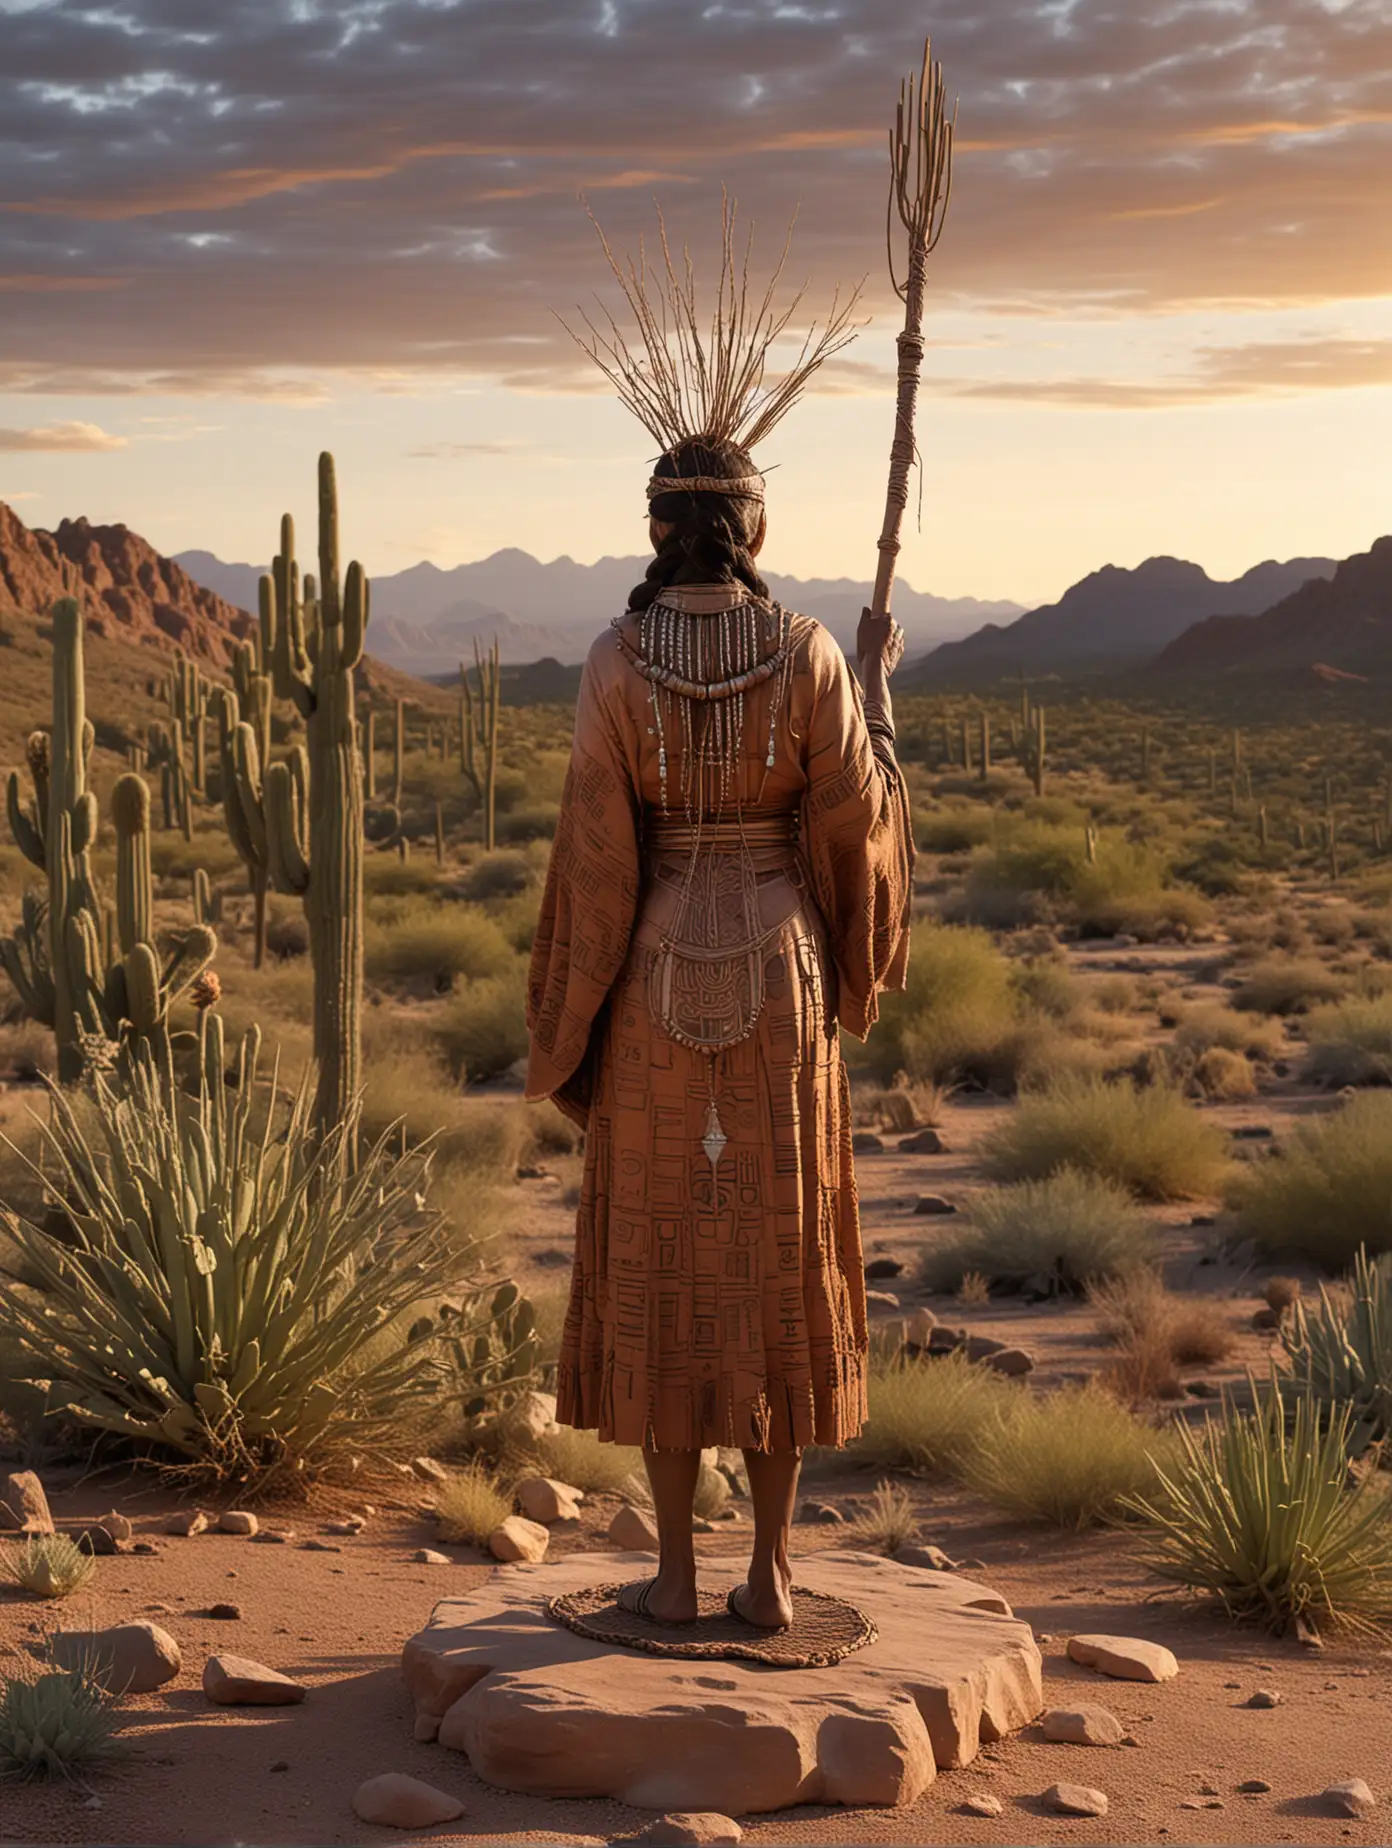 Tohono Oodham Woman Elder Statue Overlooking Sonoran Desert